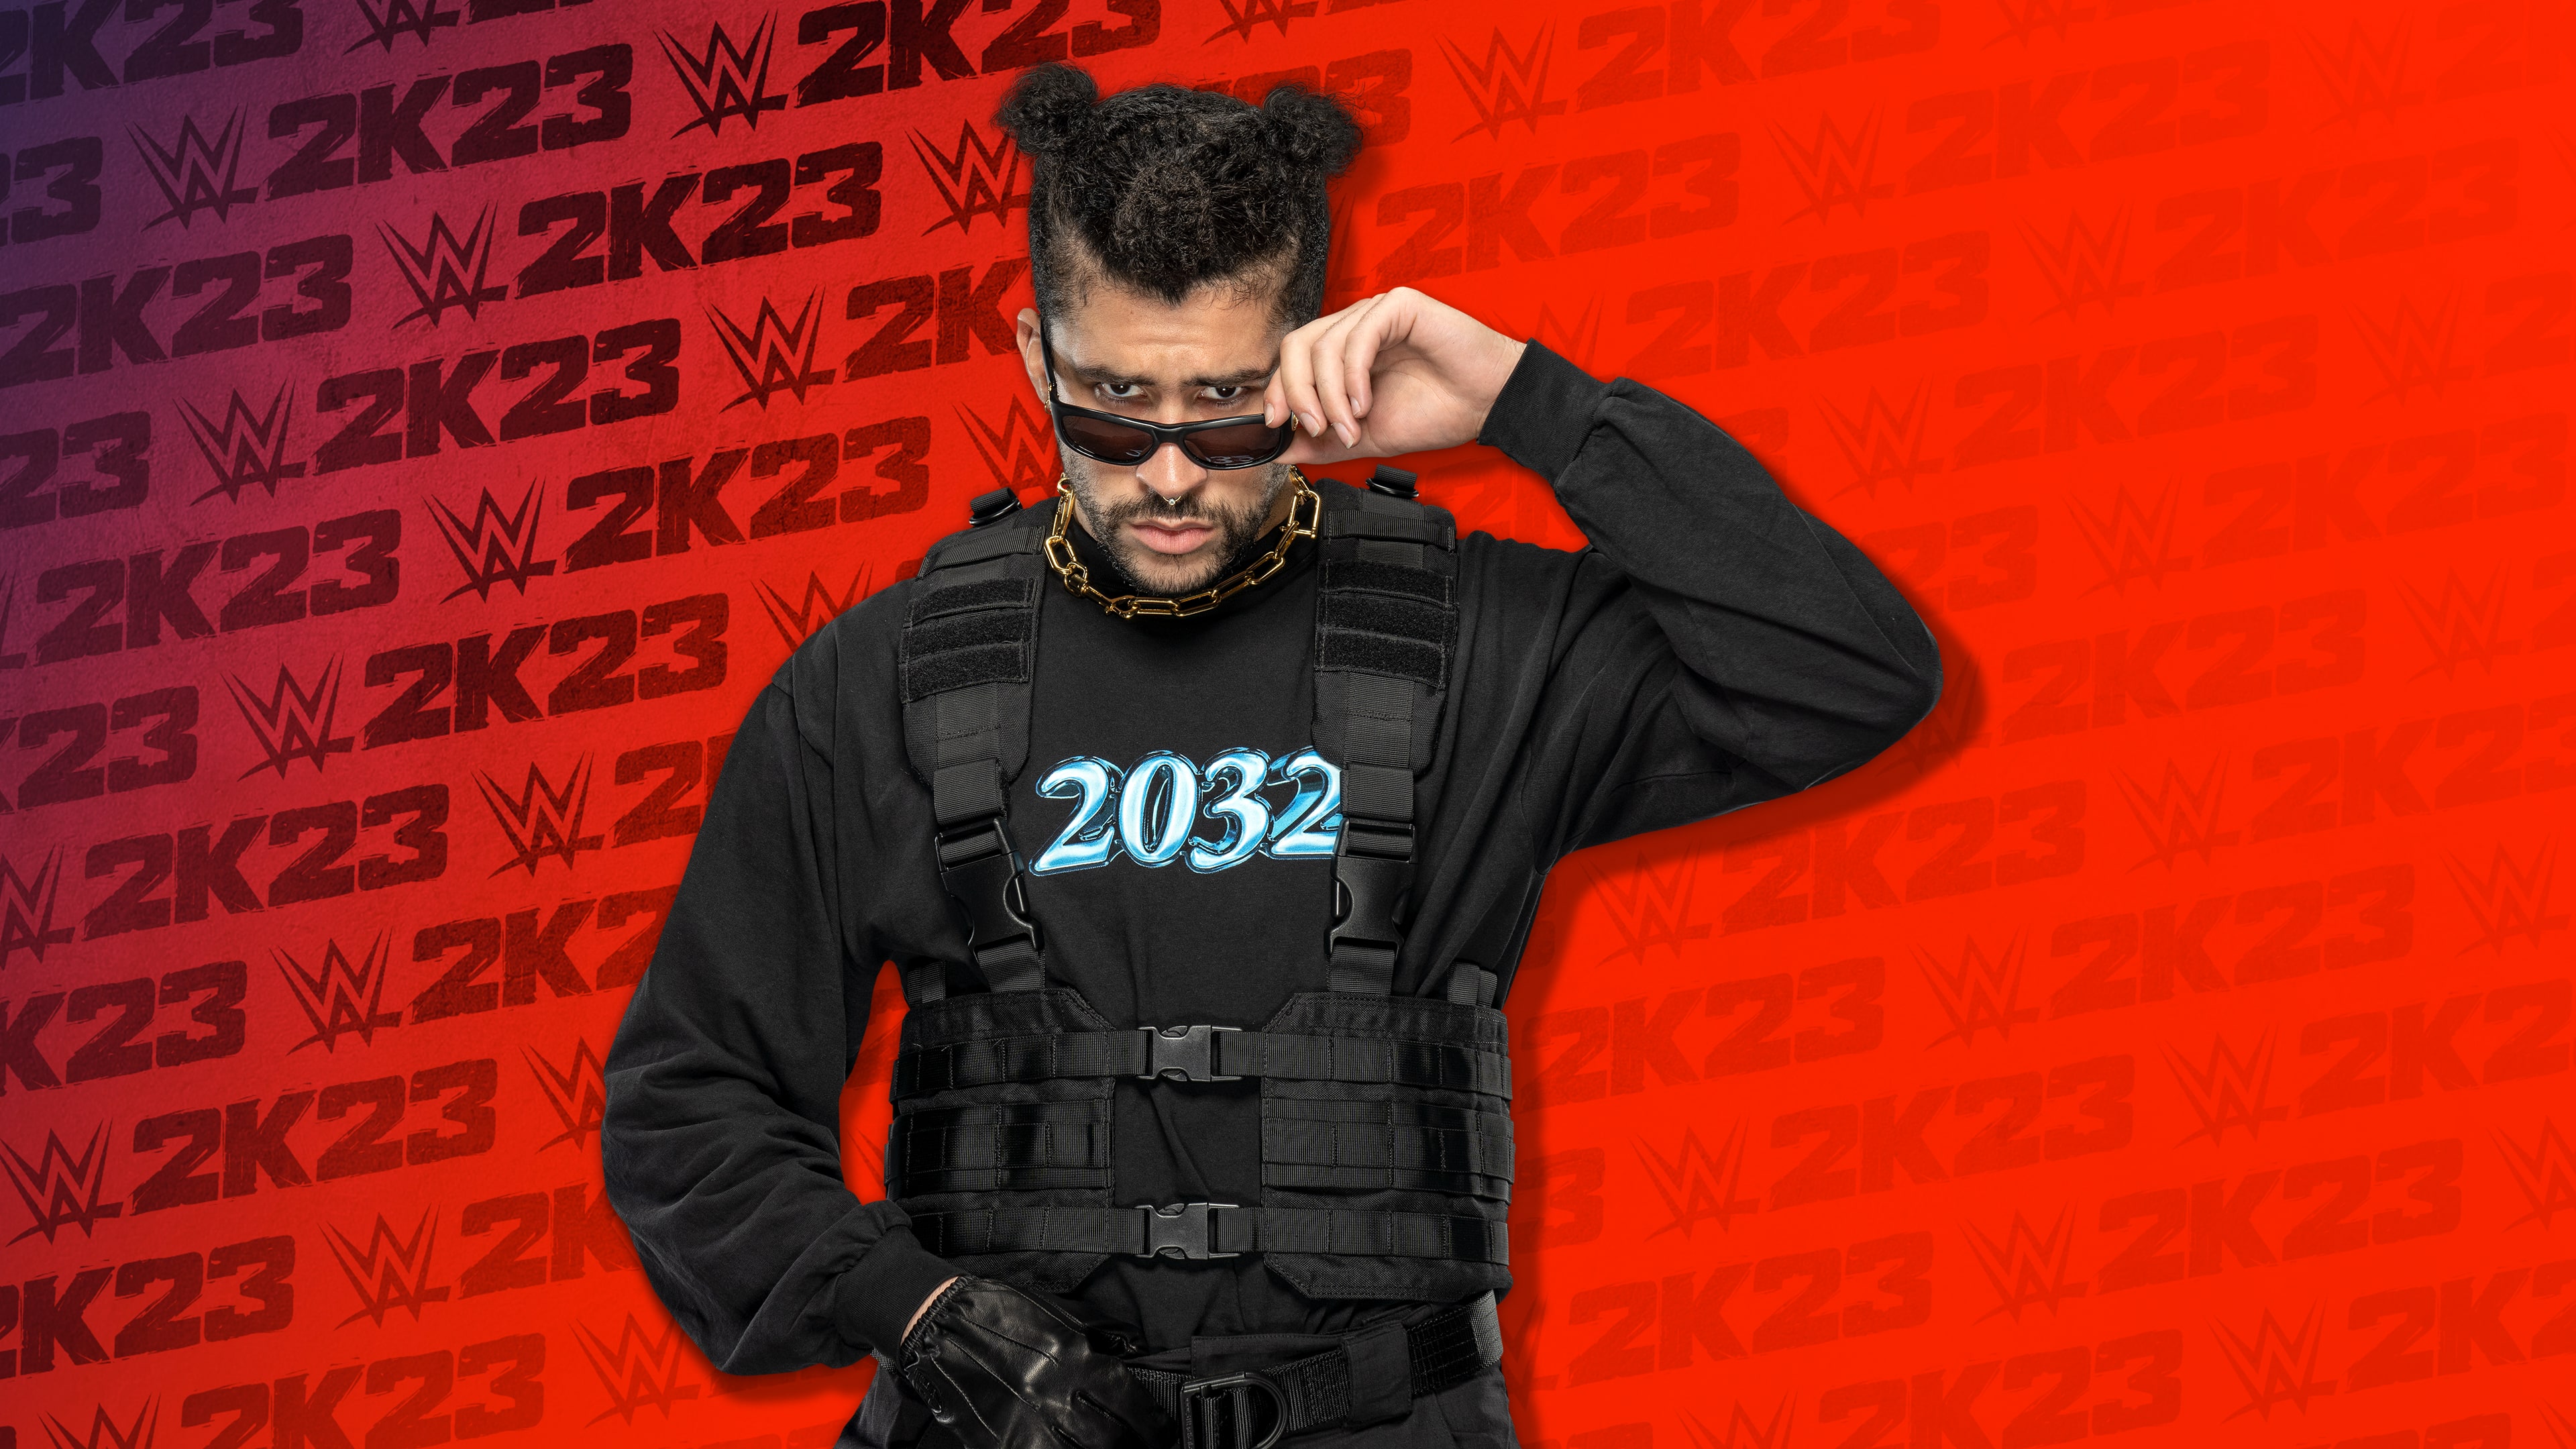 Pack bonus WWE 2K23 Bad Bunny